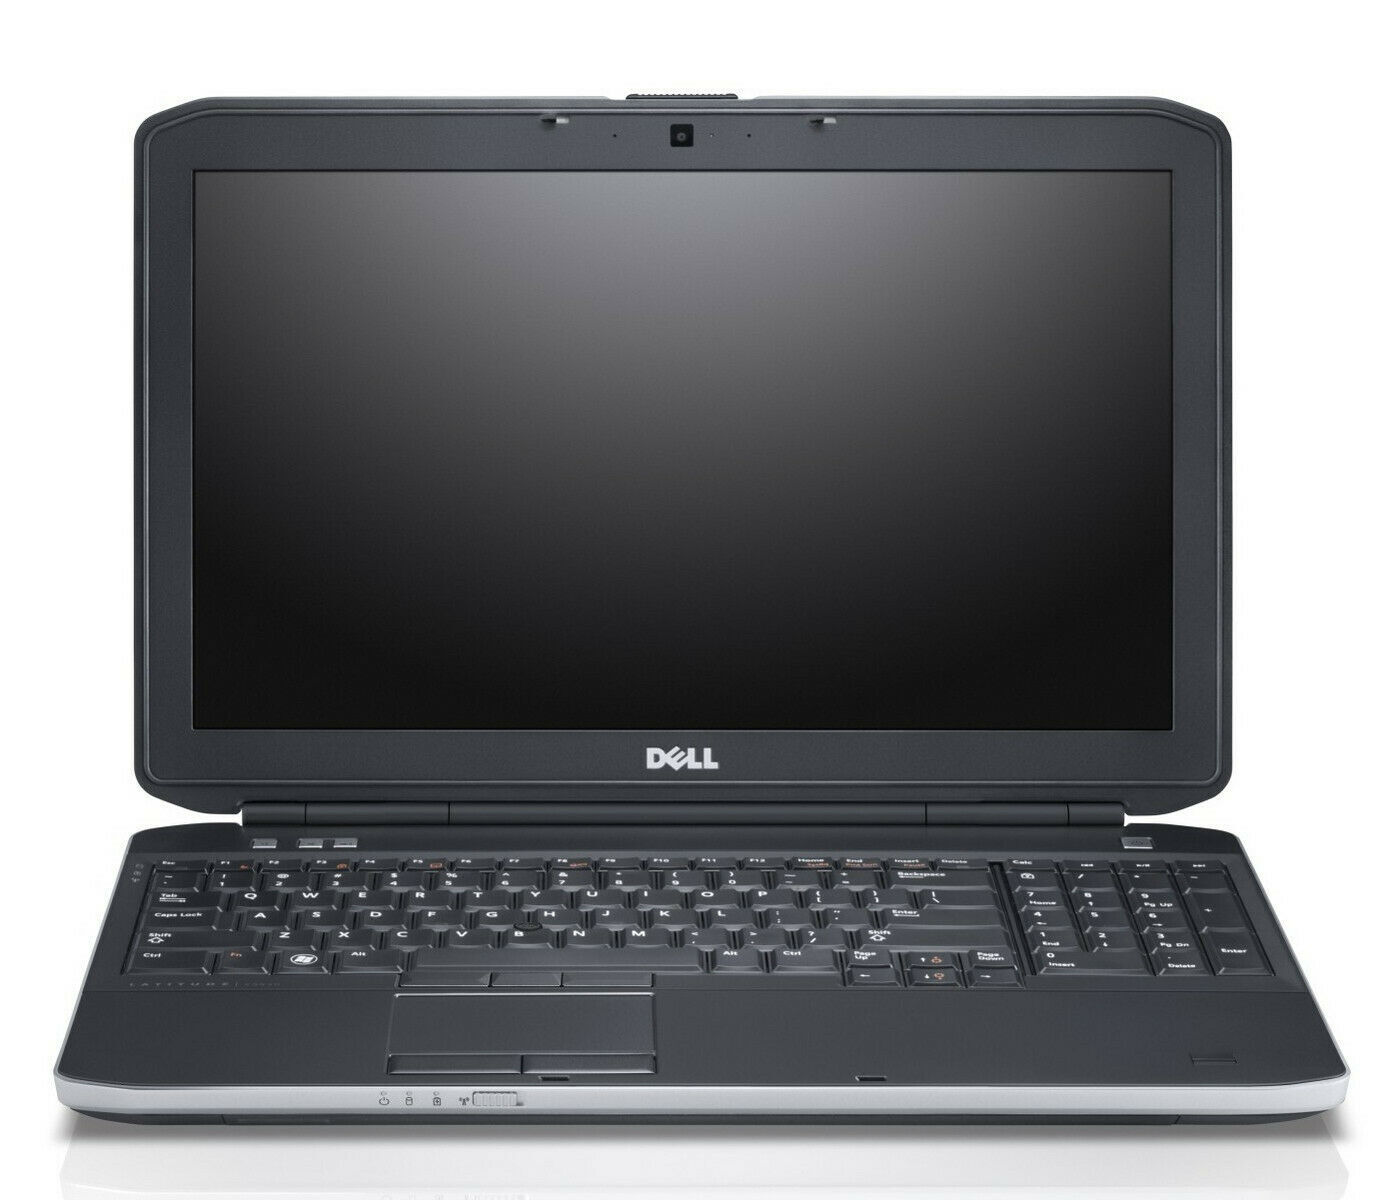 Dell Latitude E5530 Intel i5 3320m 2.60Ghz 4GB RAM 500GB HDD 15.6" HDMI NO OS Image 1